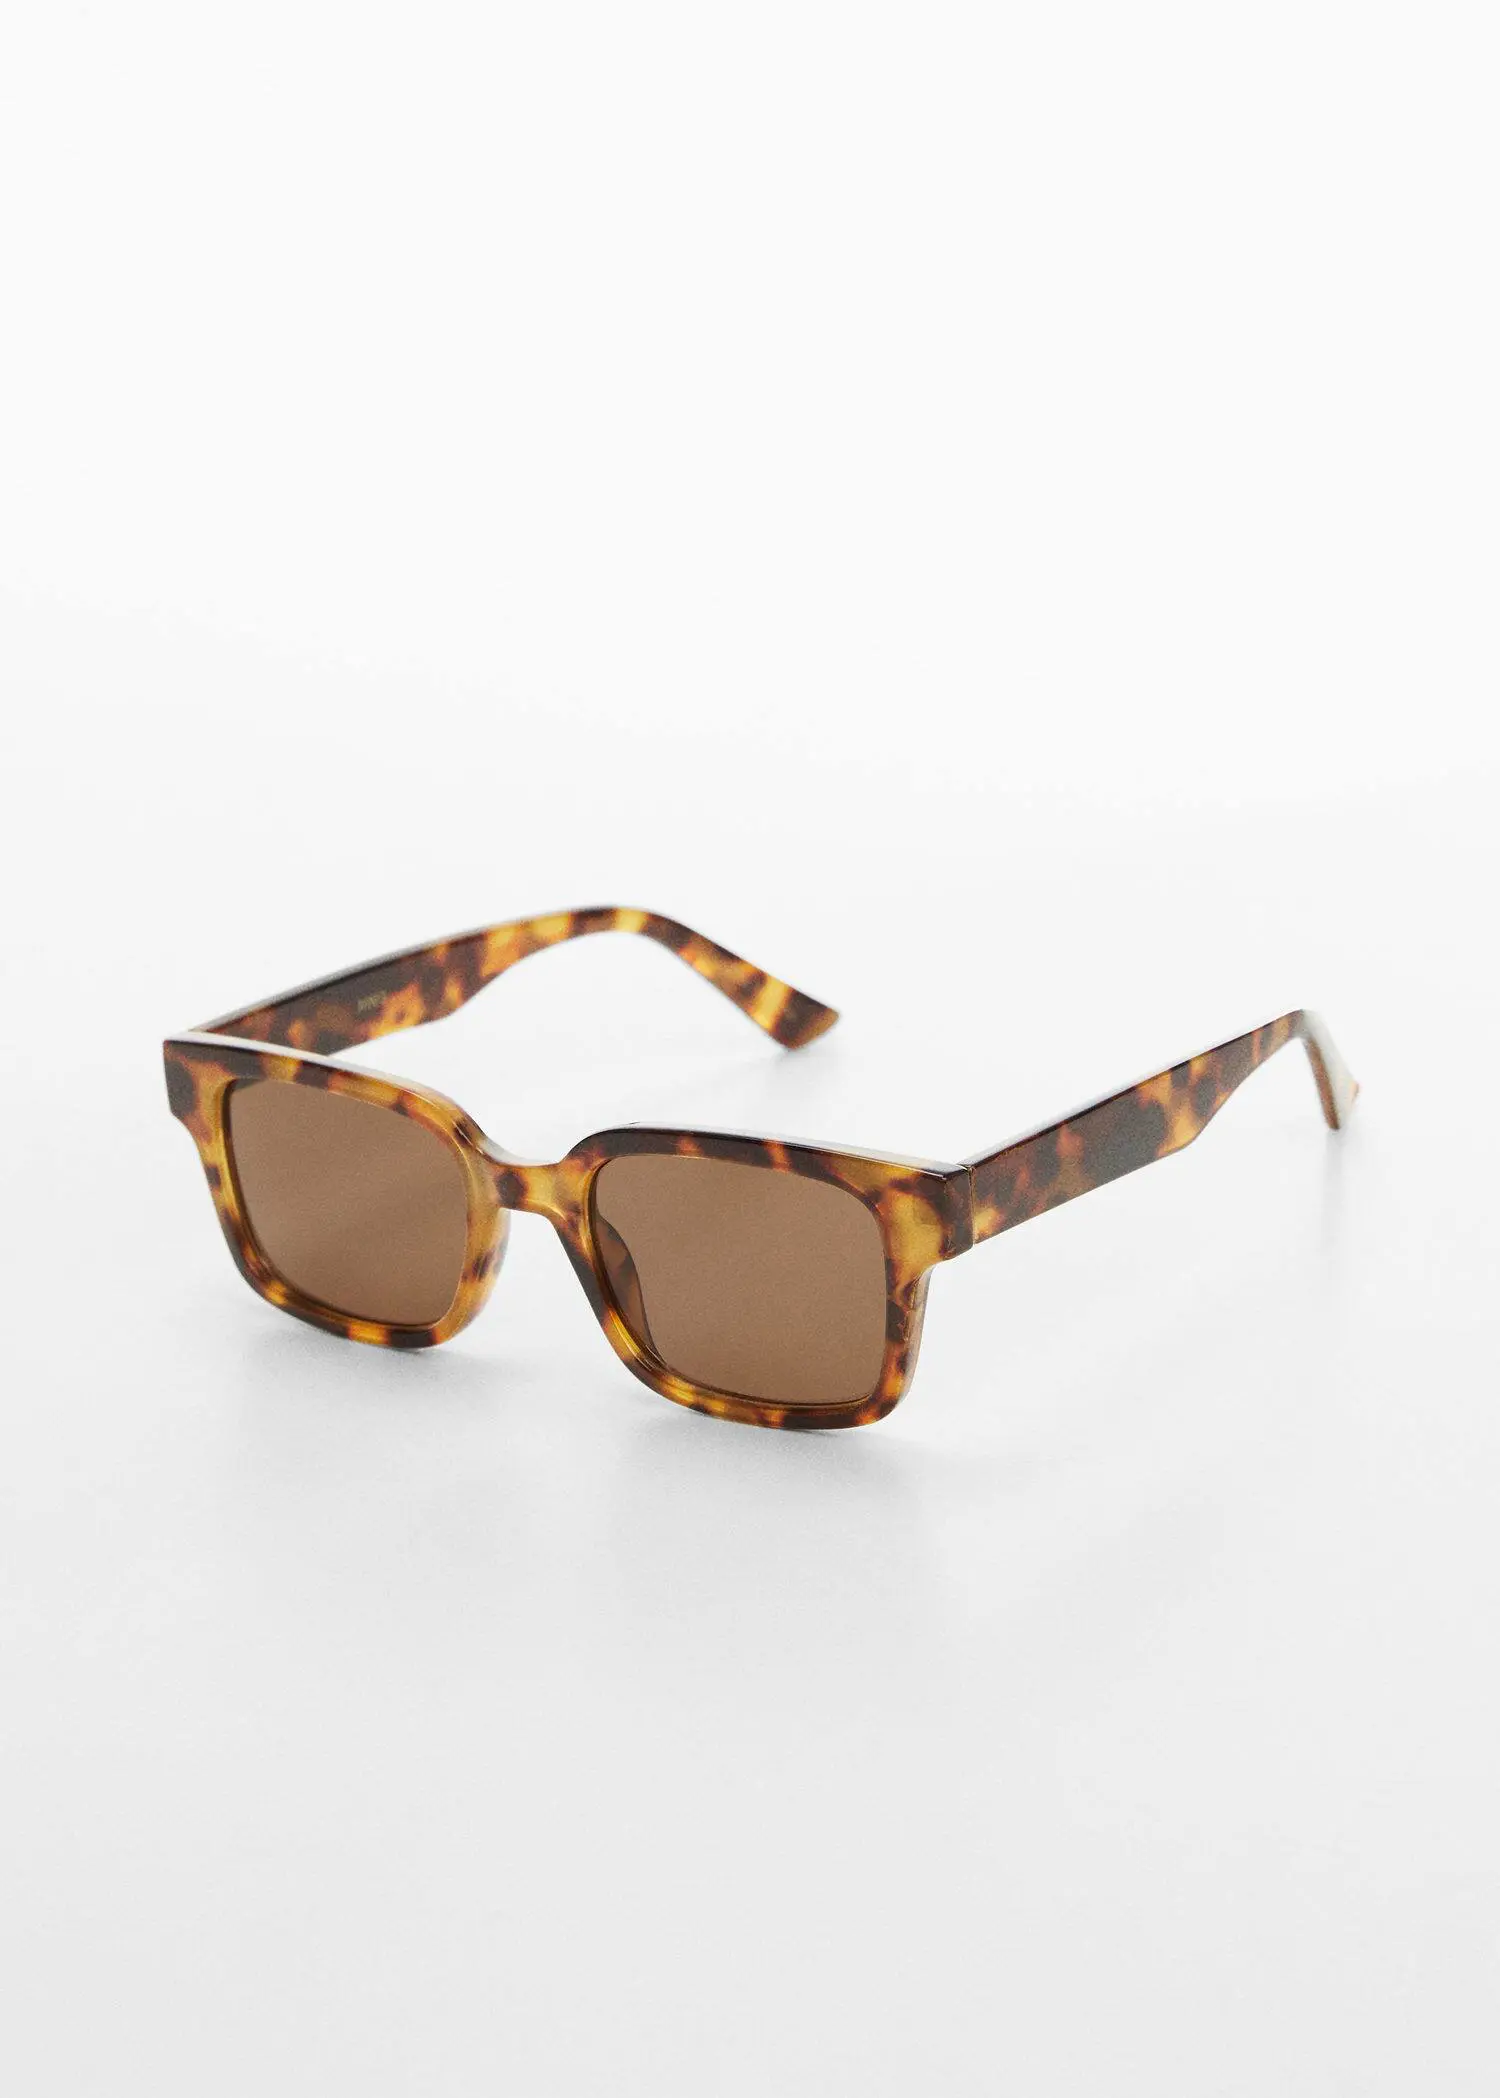 Mango Squared frame sunglasses. 2